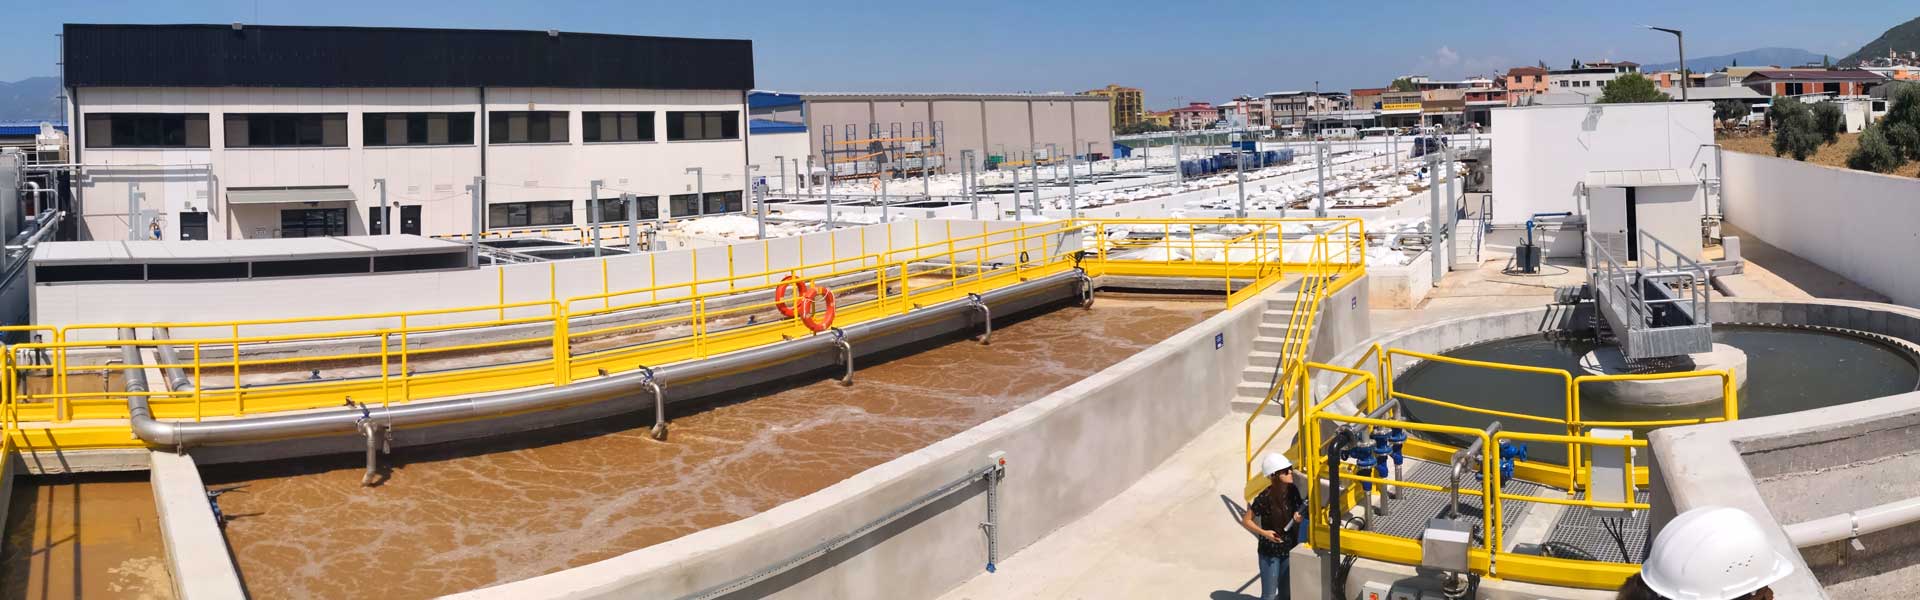 wastewater treatment plant company